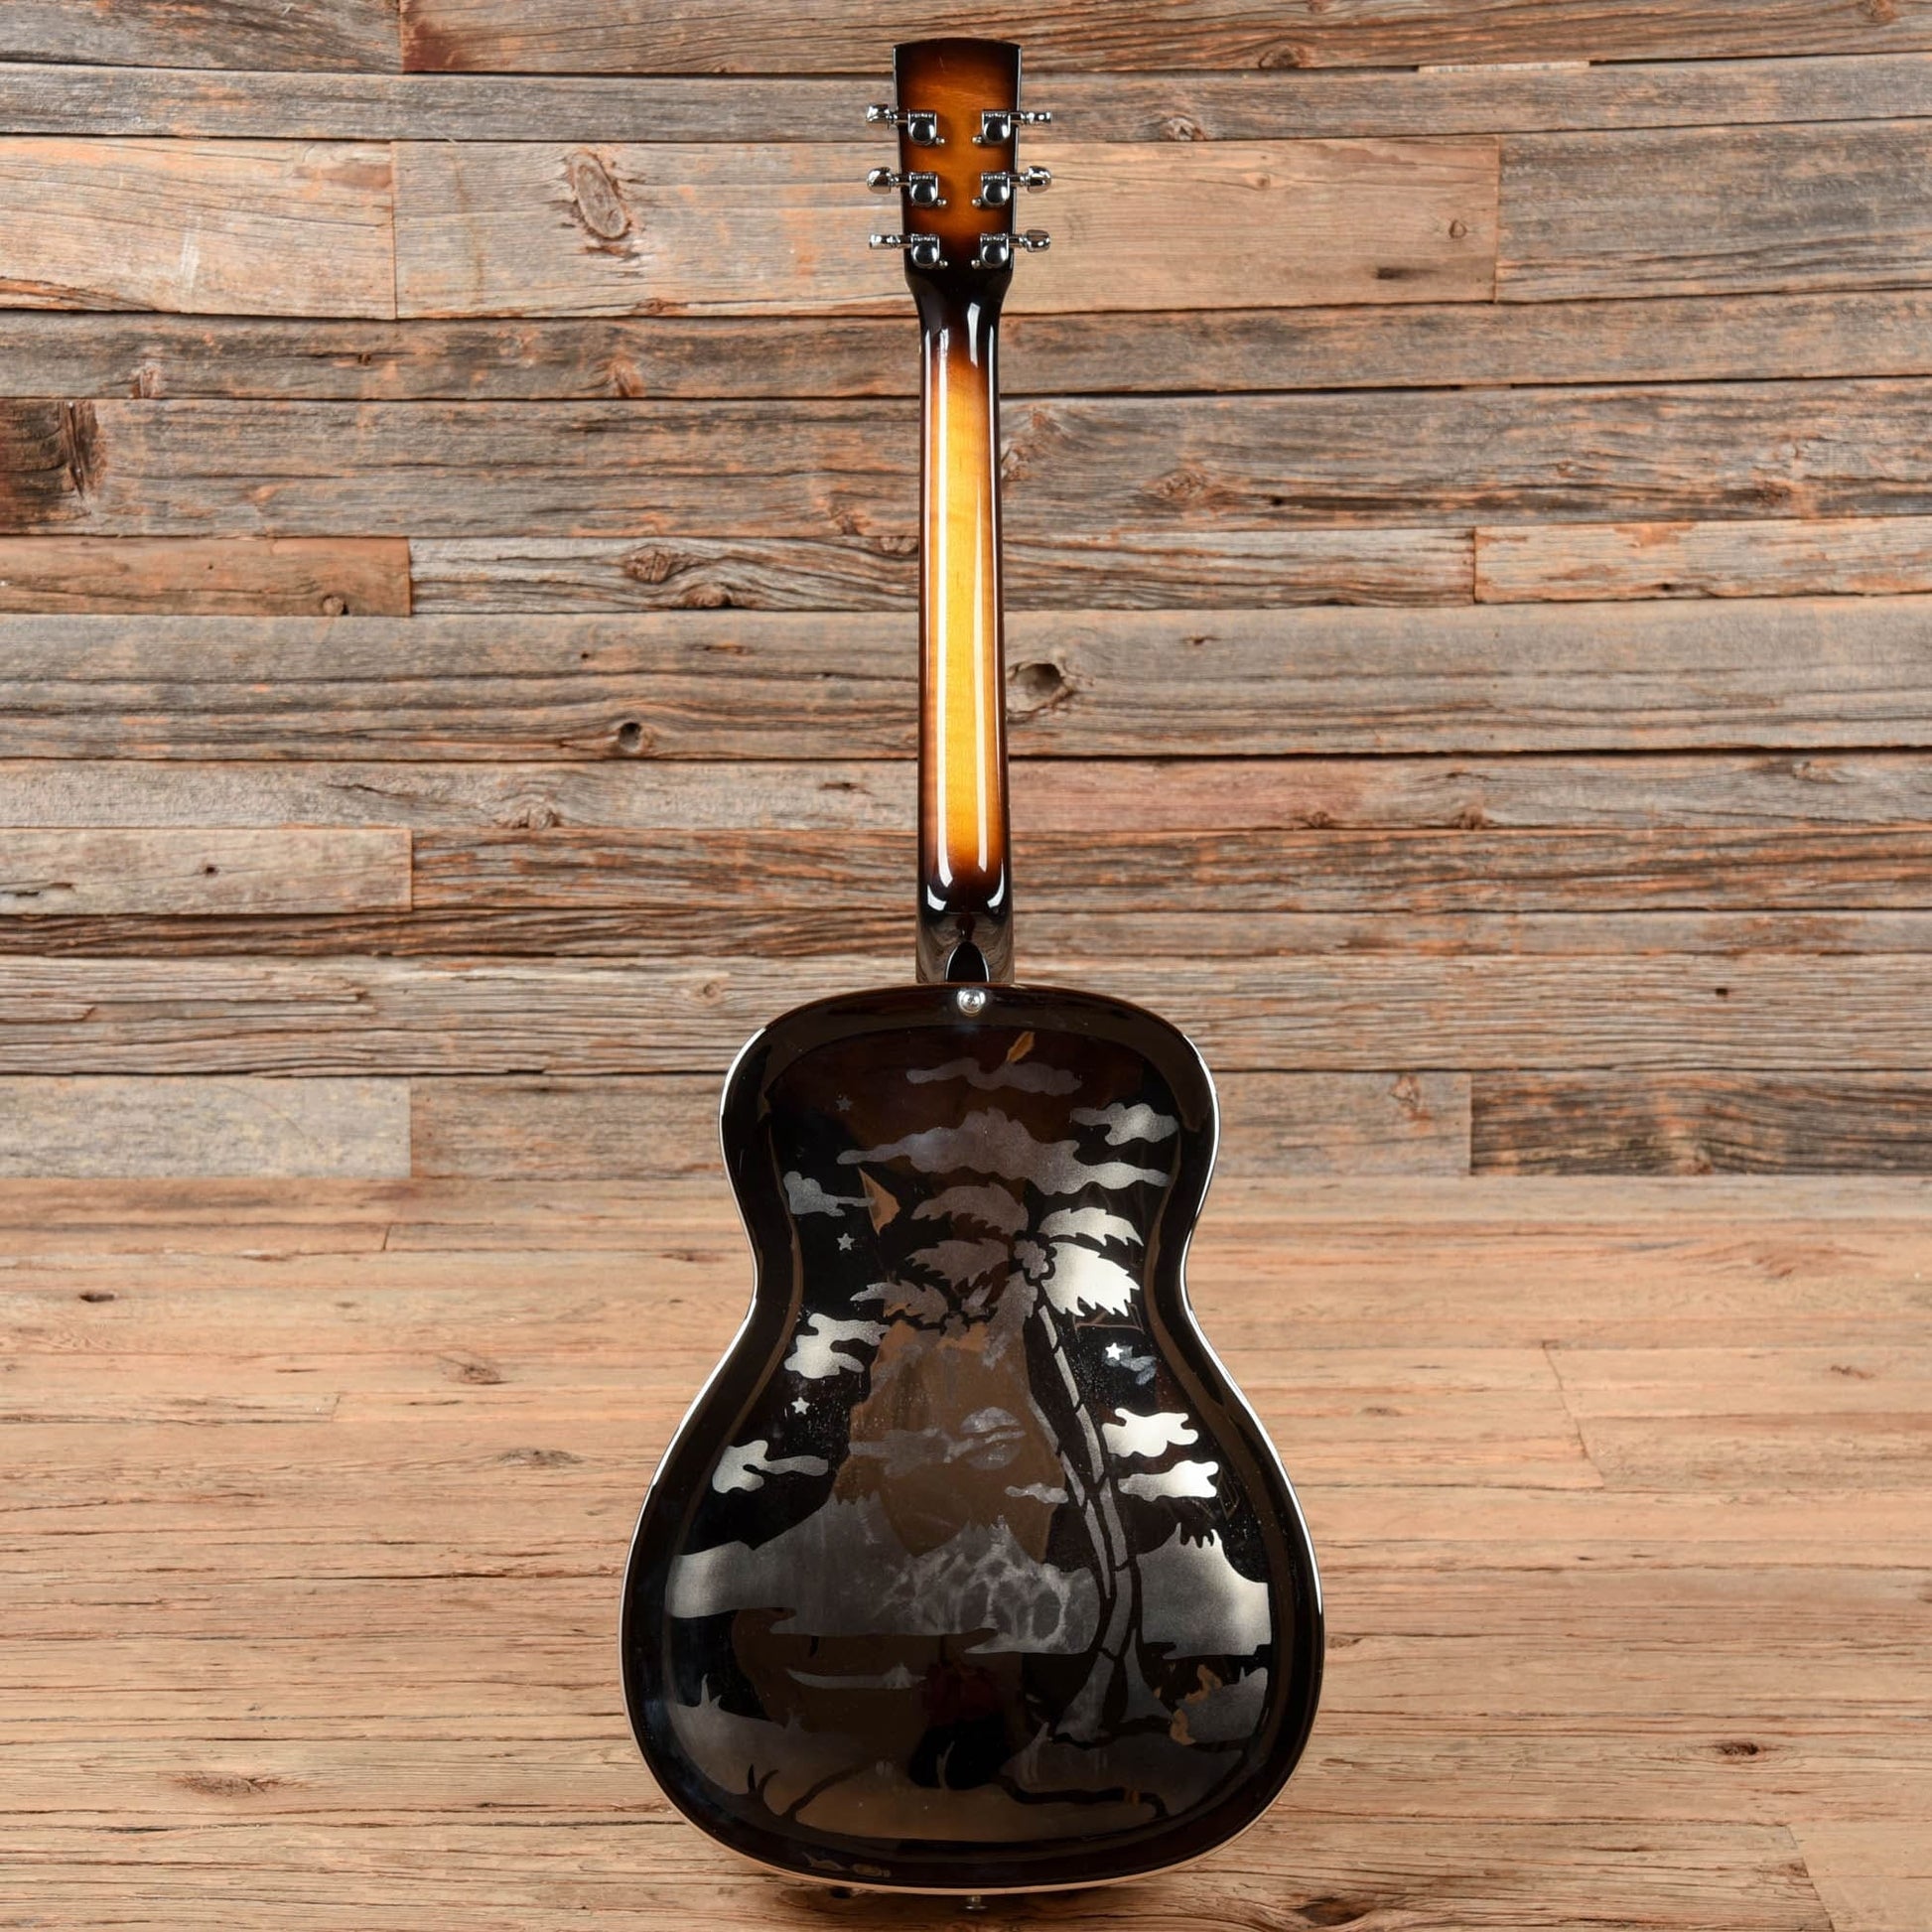 Dobro DM33 Polished Metal Acoustic Guitars / Resonator